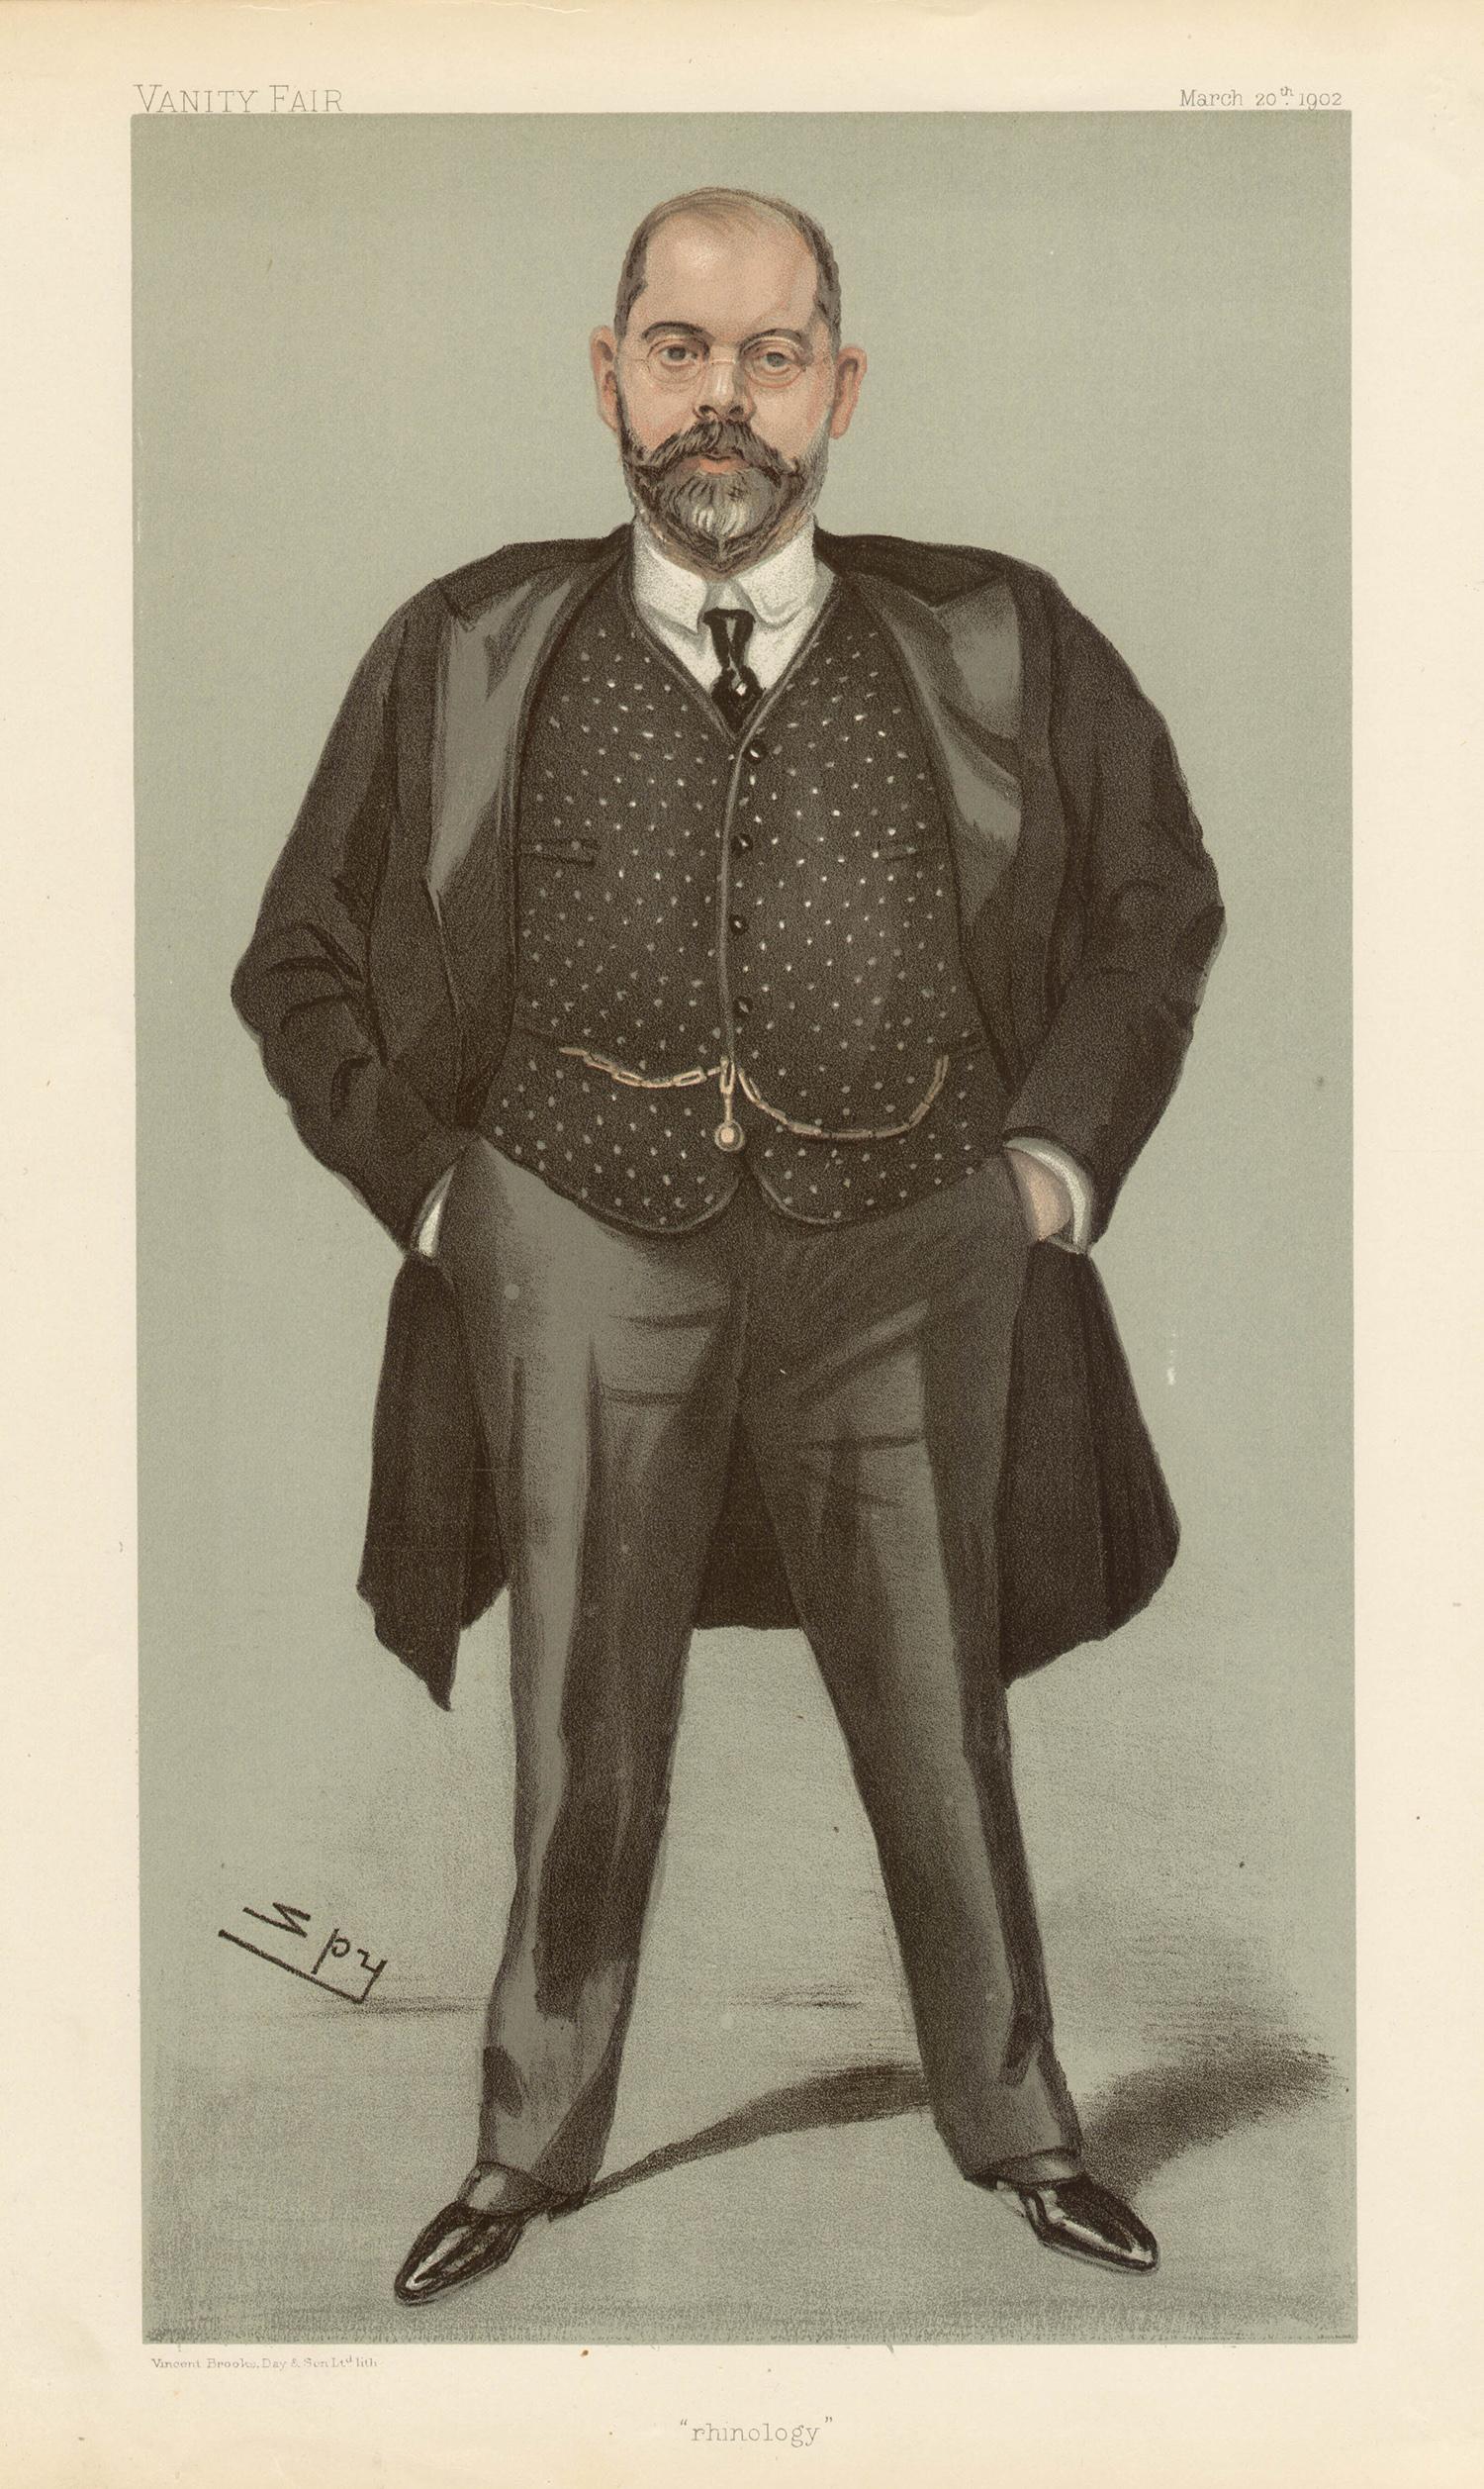 Dr Robert Spicer, Vanity Fair medical portrait chromolithograph, 1902